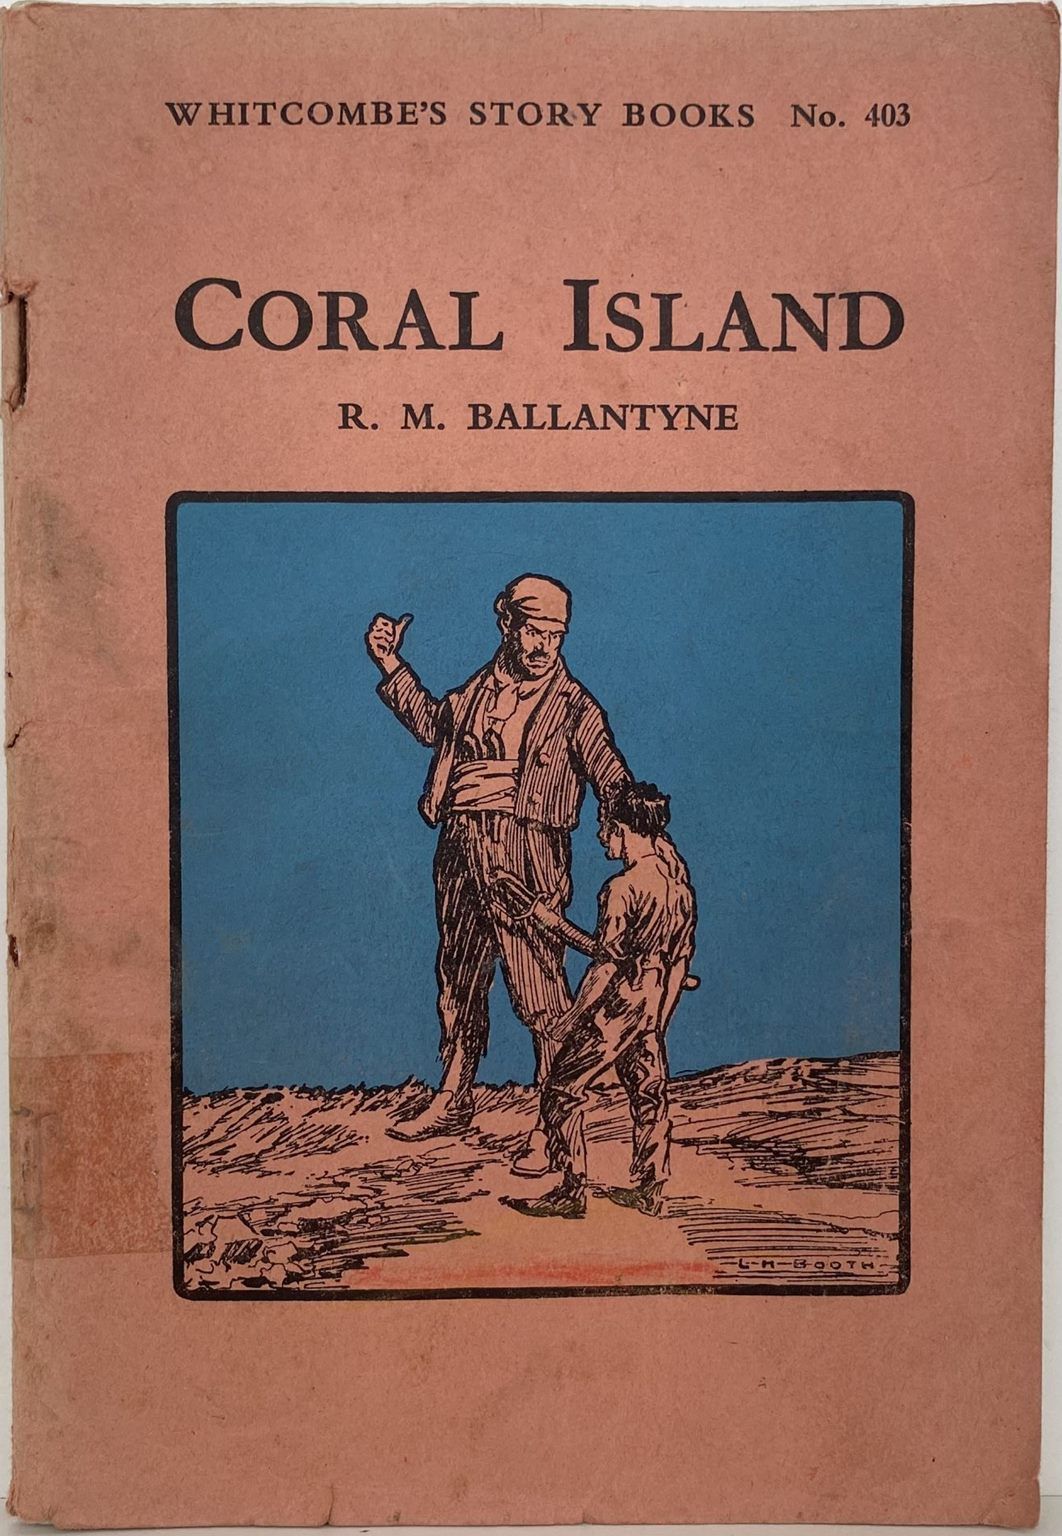 CORAL ISLAND: Whitcombe's Story Books No 403